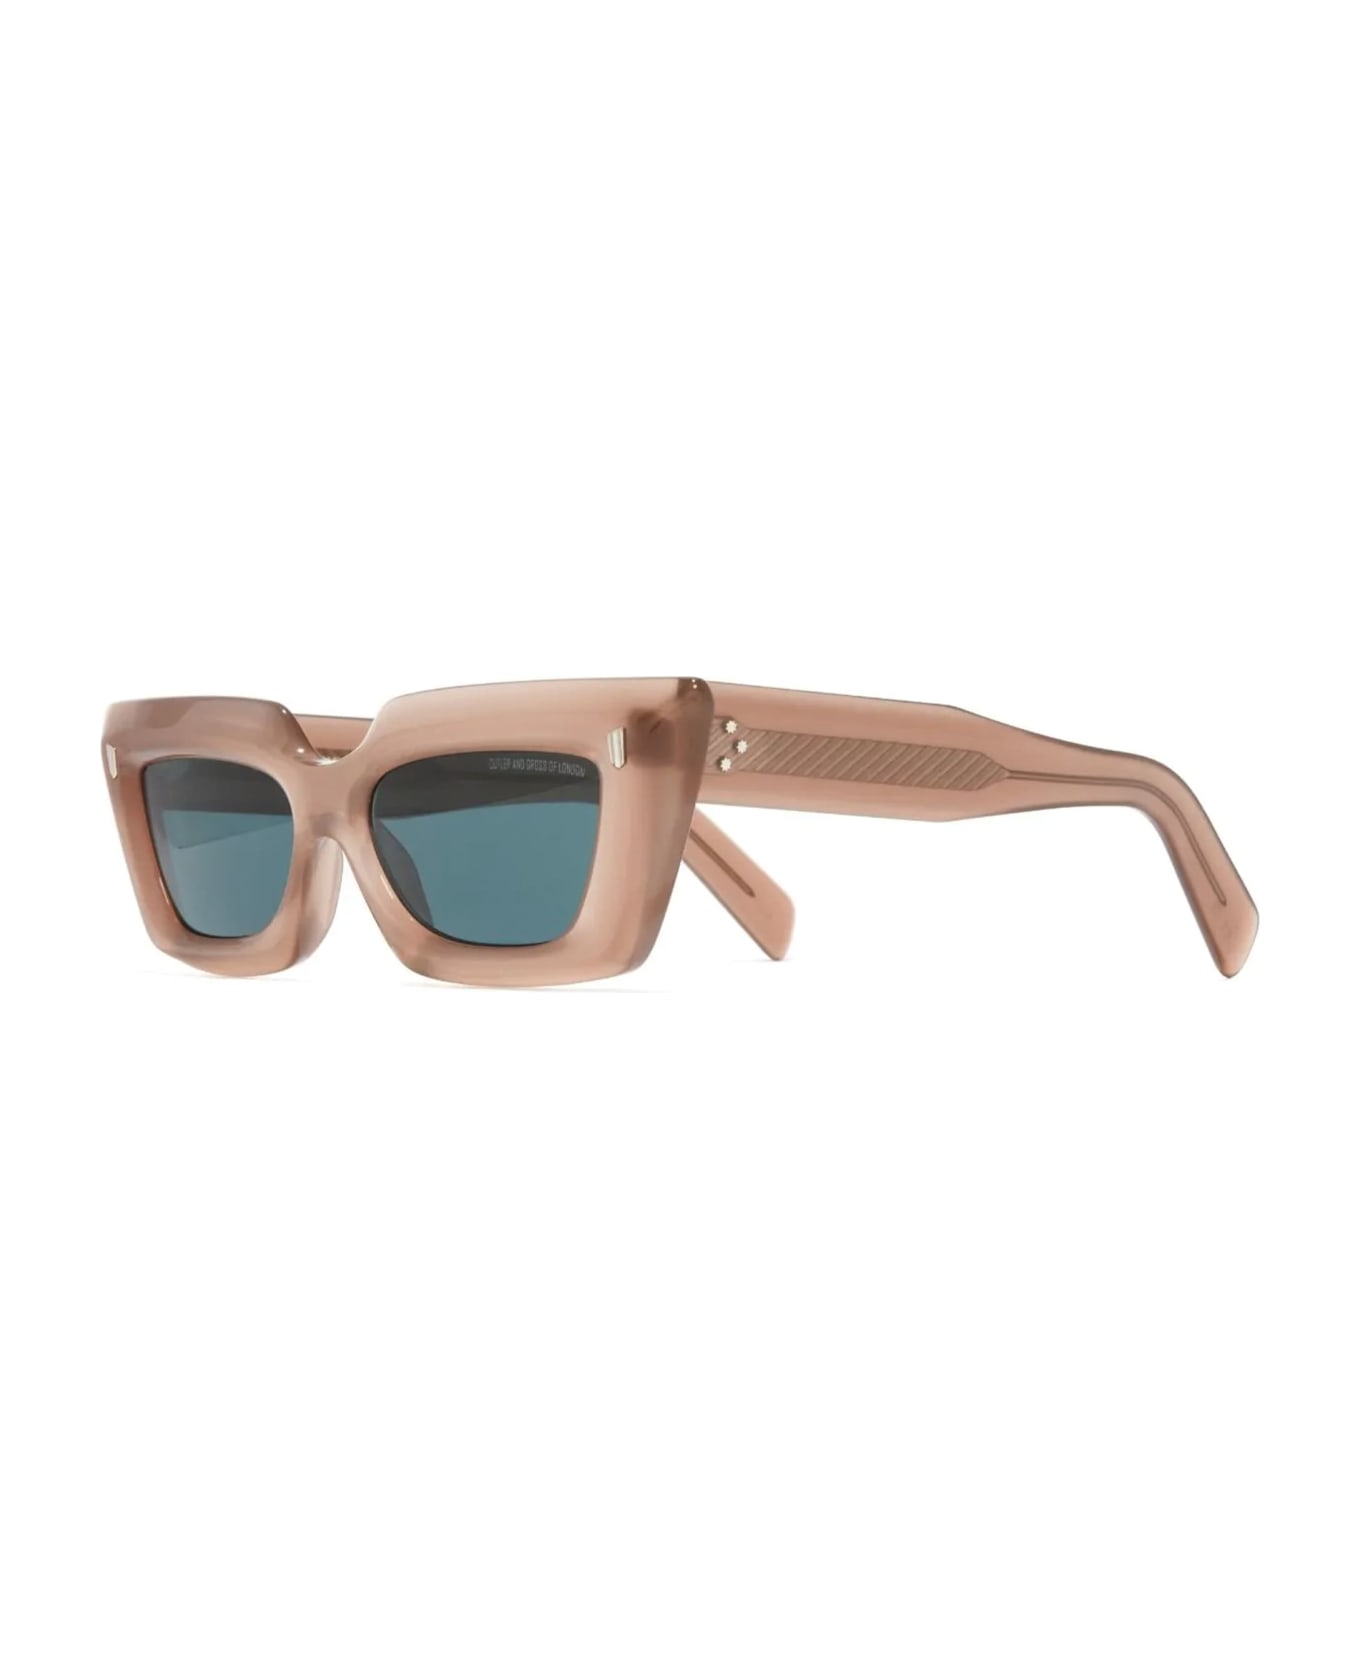 Cutler and Gross 1408 / Humble Potato Sunglasses - pink サングラス